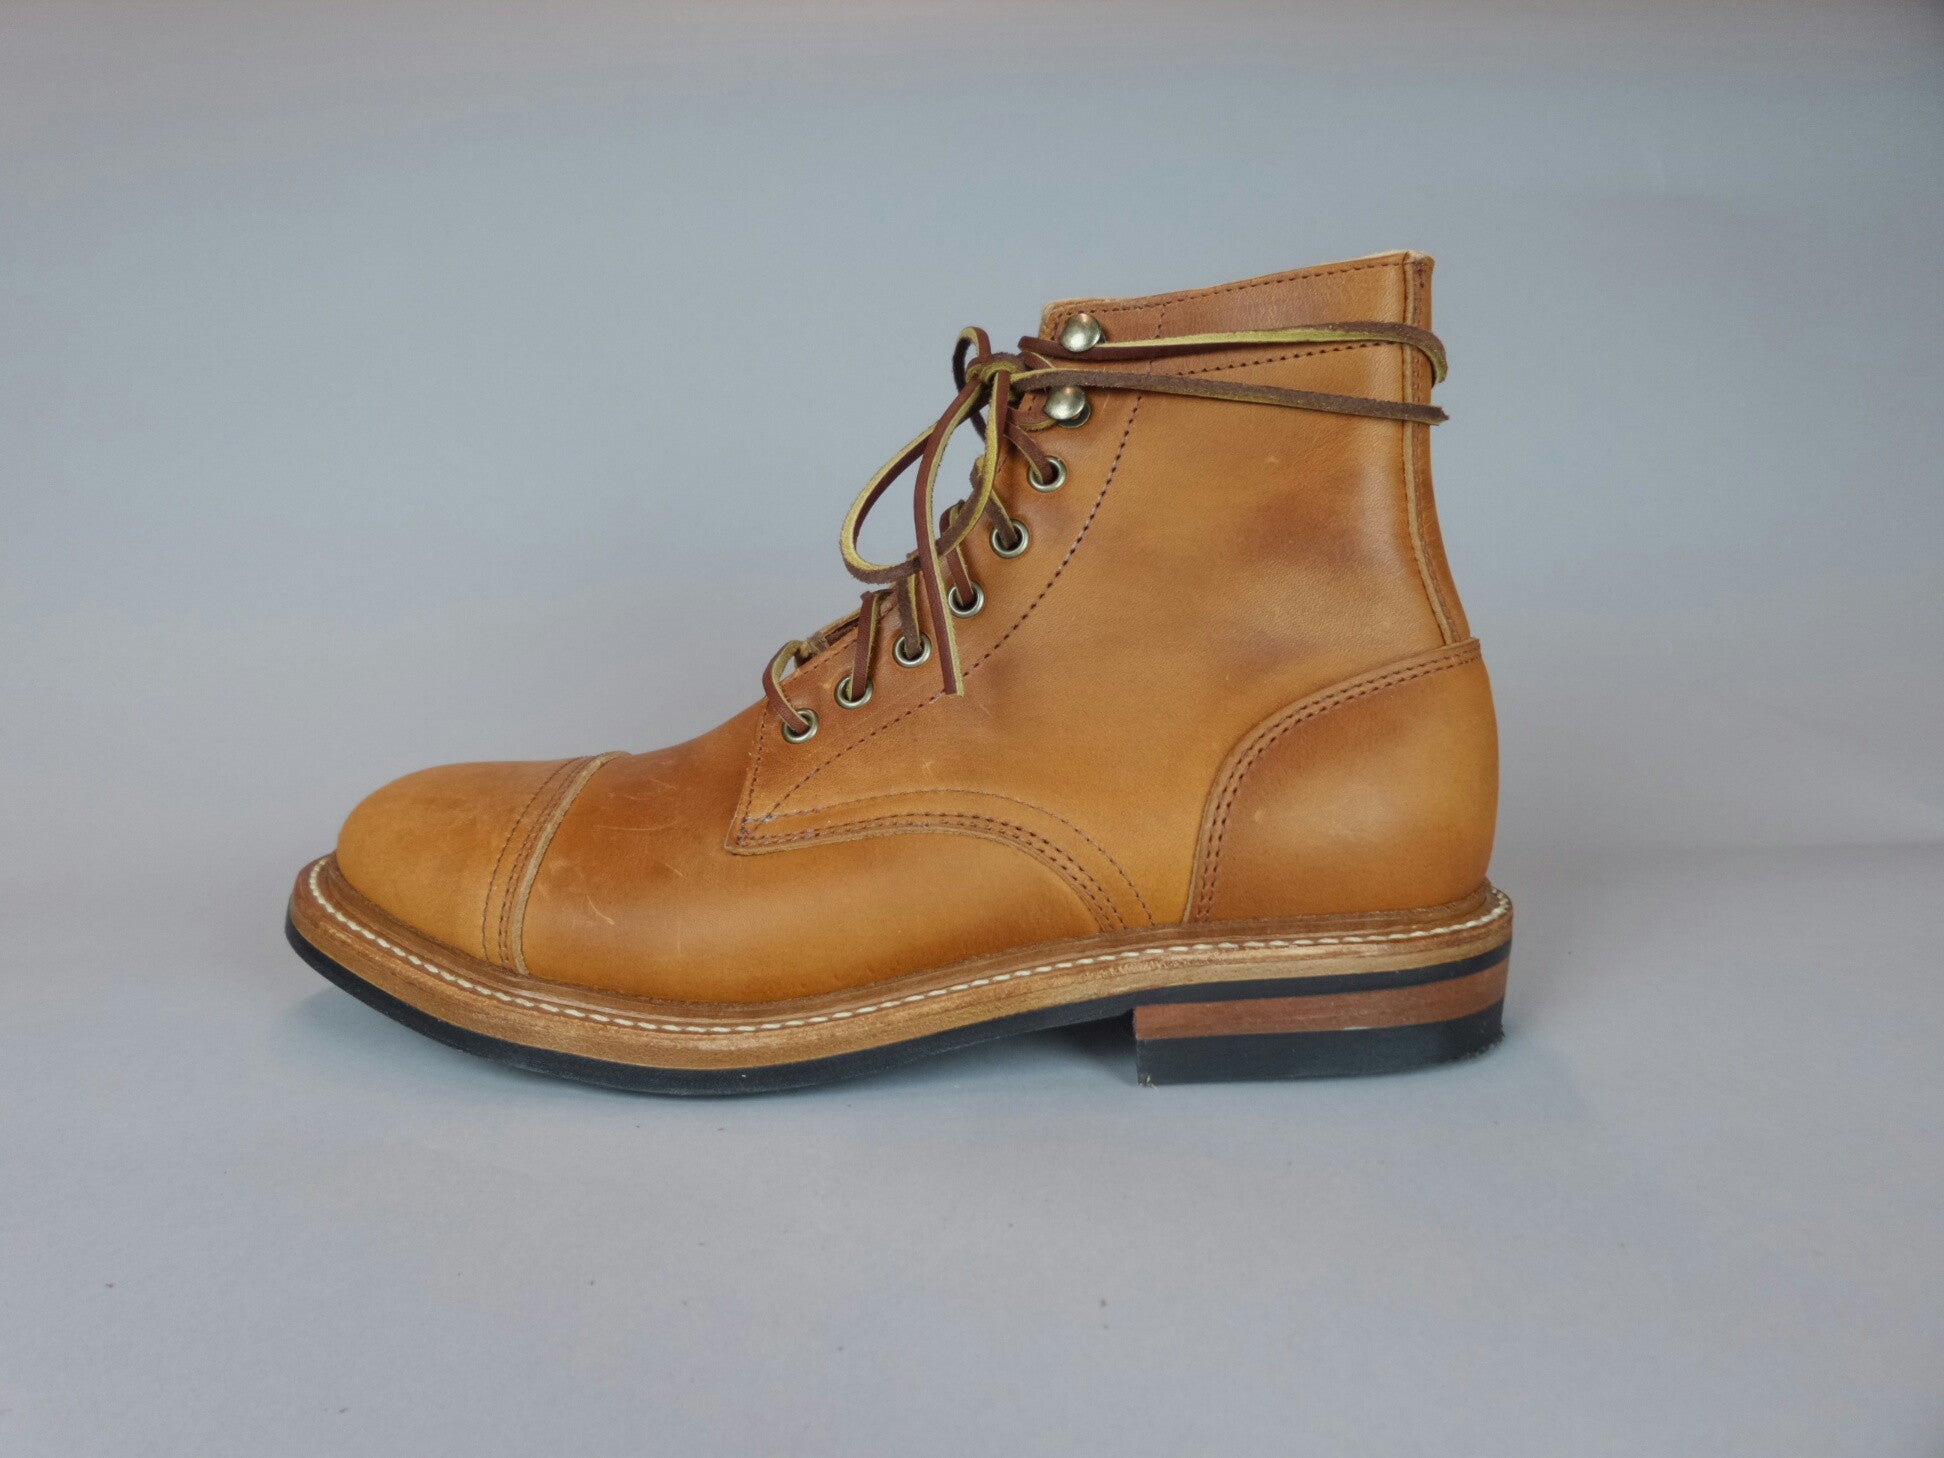 oak street boot company